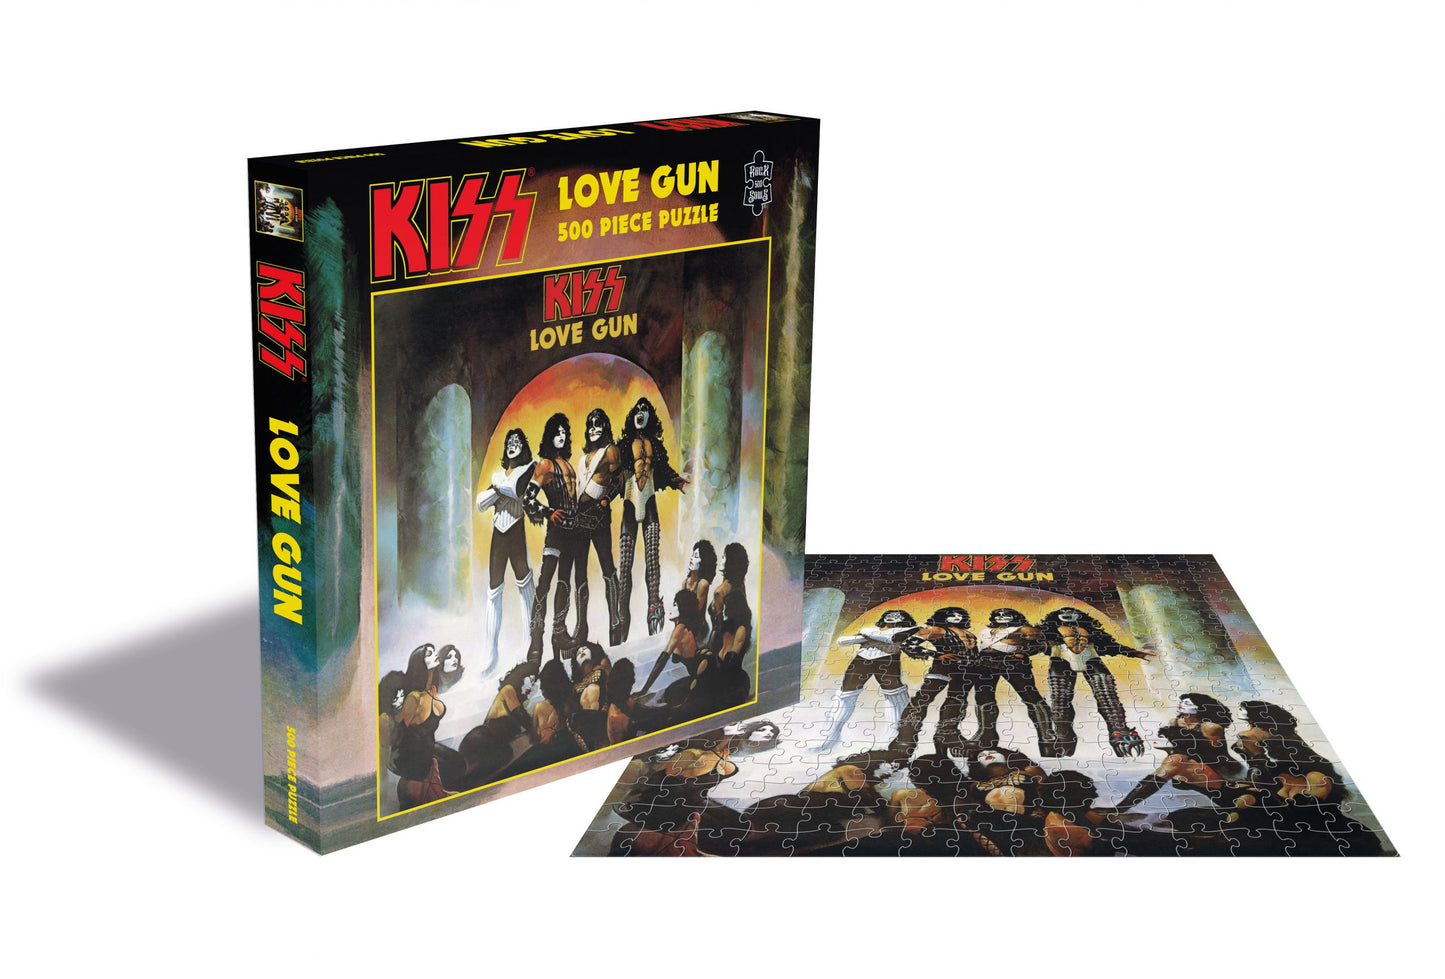 Kiss - Love Gun, 500 Piece Puzzle